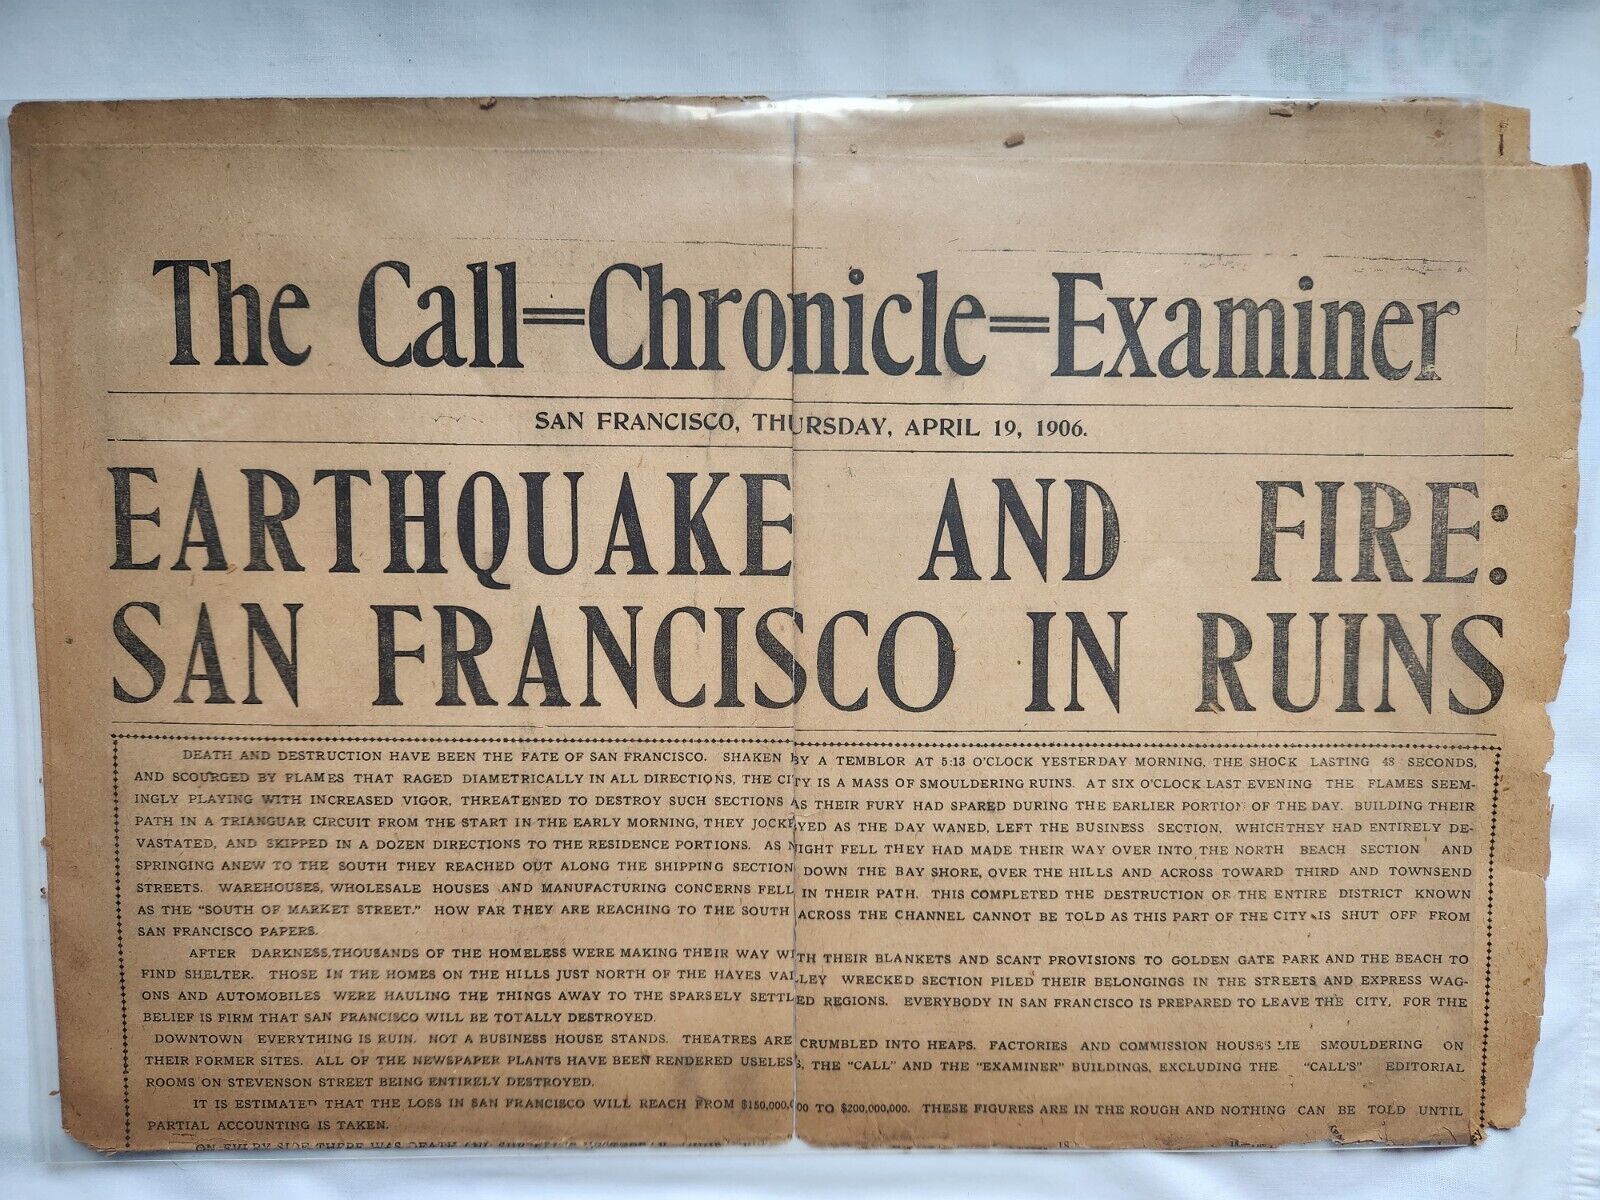 San Francisco The Call - Chronicle - Examiner Earthquake Edition April 19, 1906